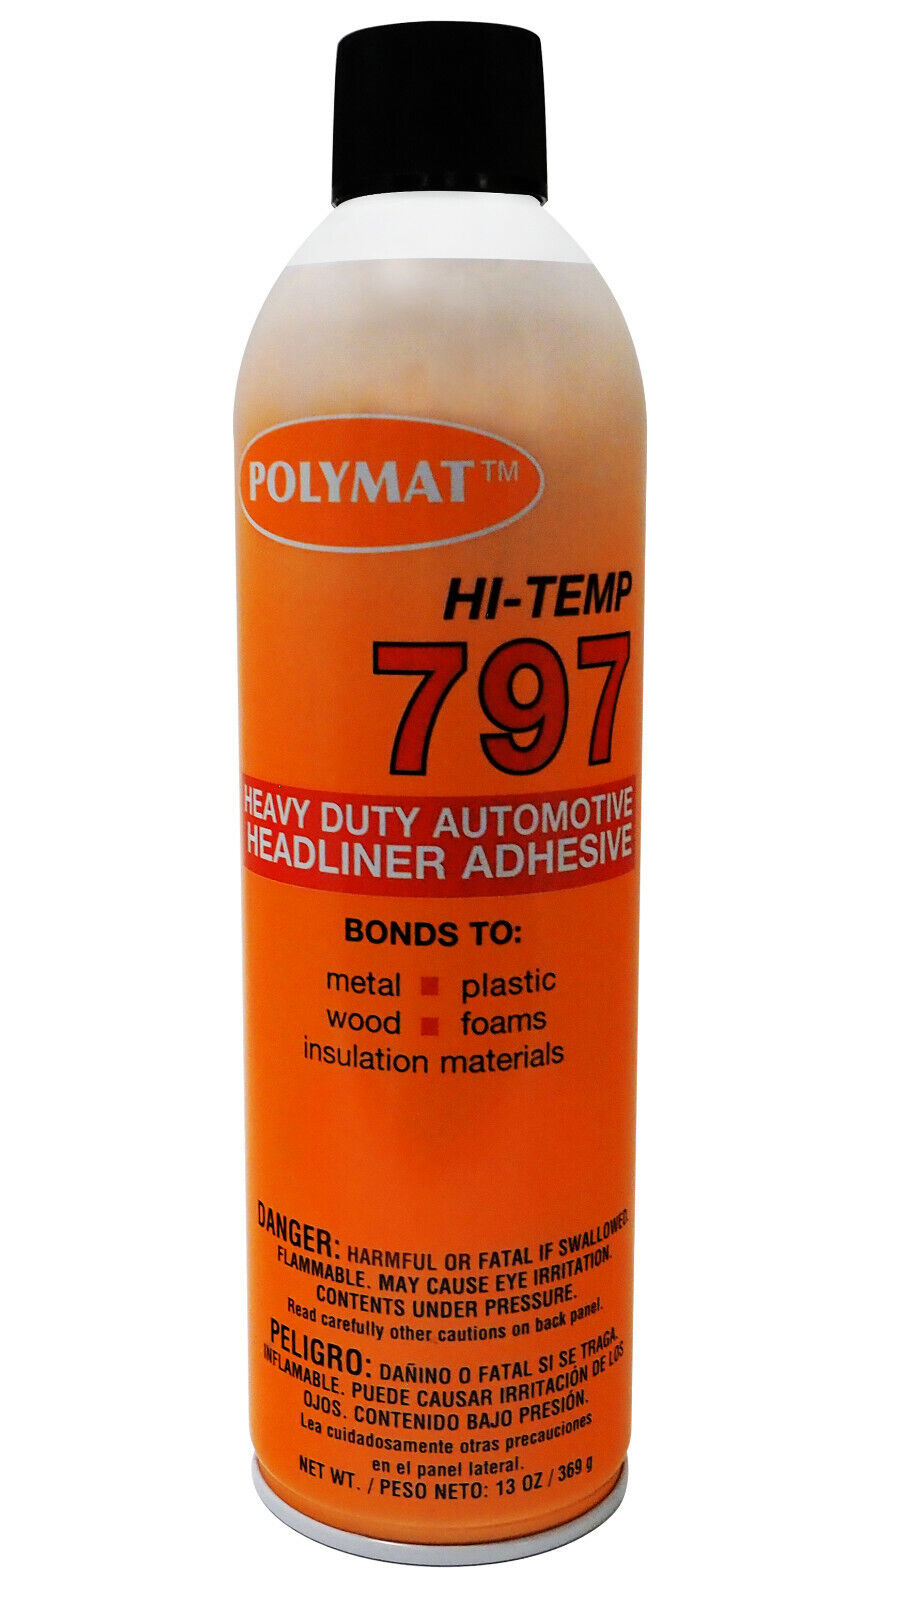 Polymat 797 High-temp Adhesive Automotive Vehicle Rv Headliner Glue [160f]